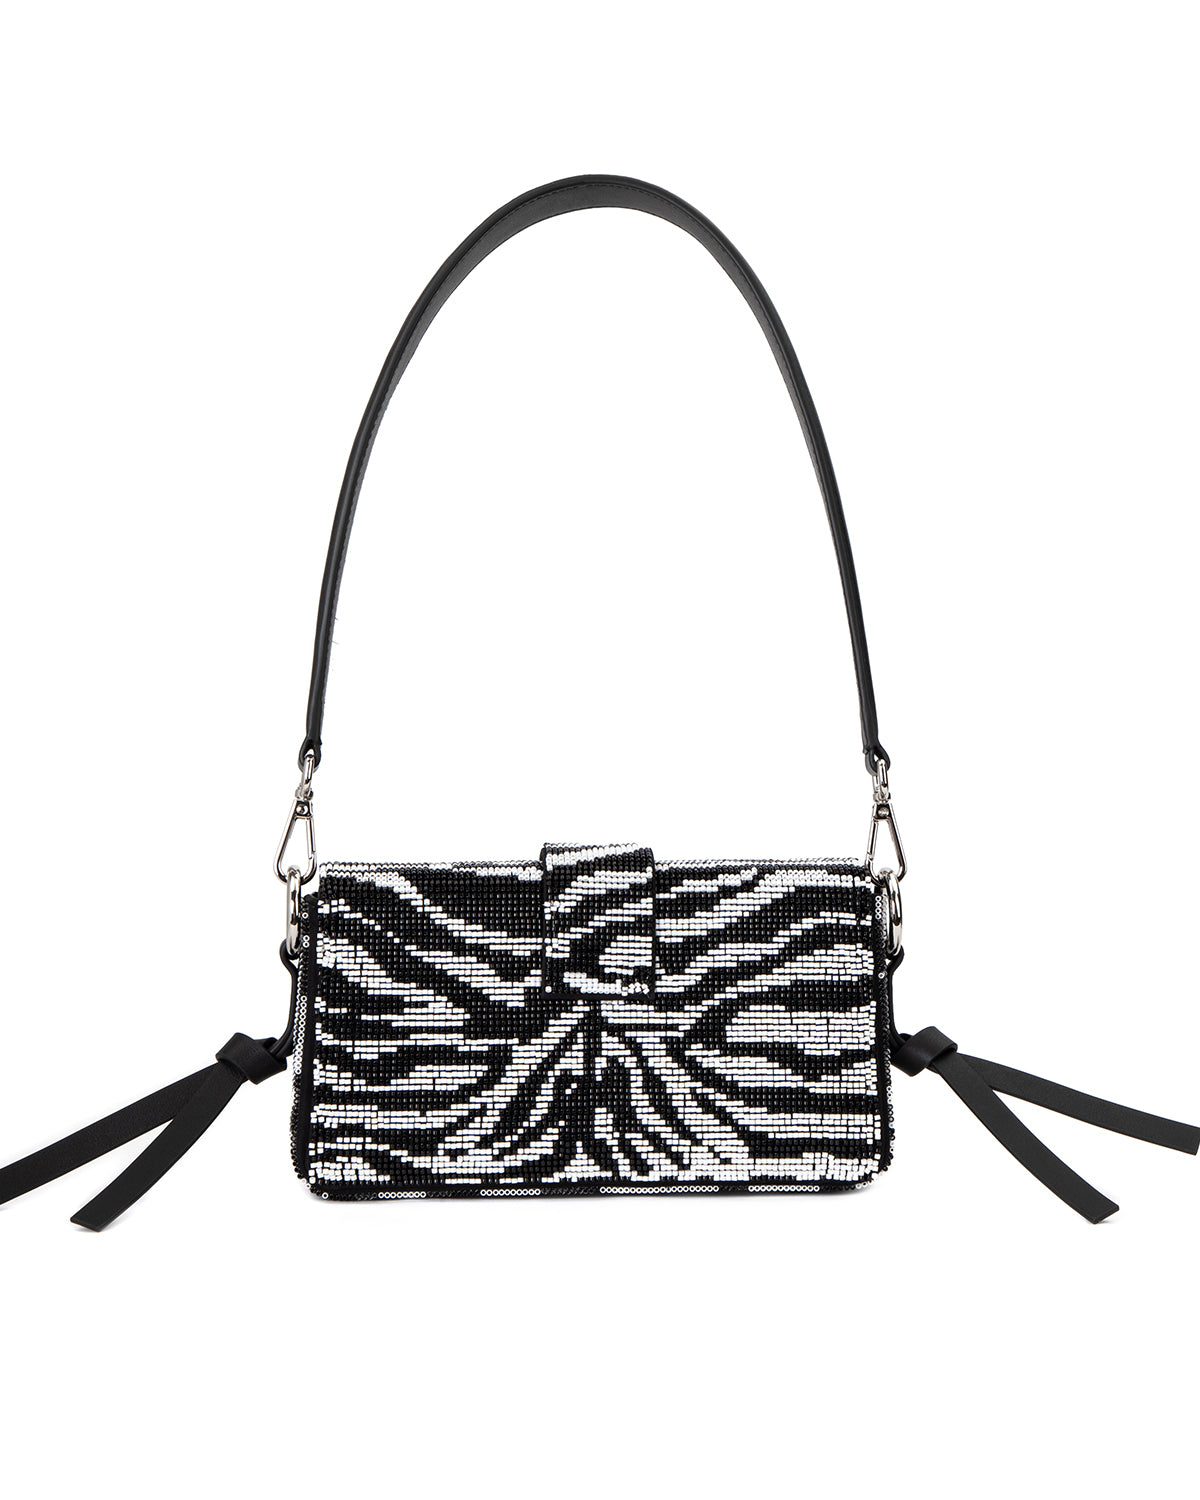 Yucurem Classic Zebra Print Jute Handbag, Large Capacity Shopping Bag Tote  for Travel Shopping (Zebra Print) - Walmart.com